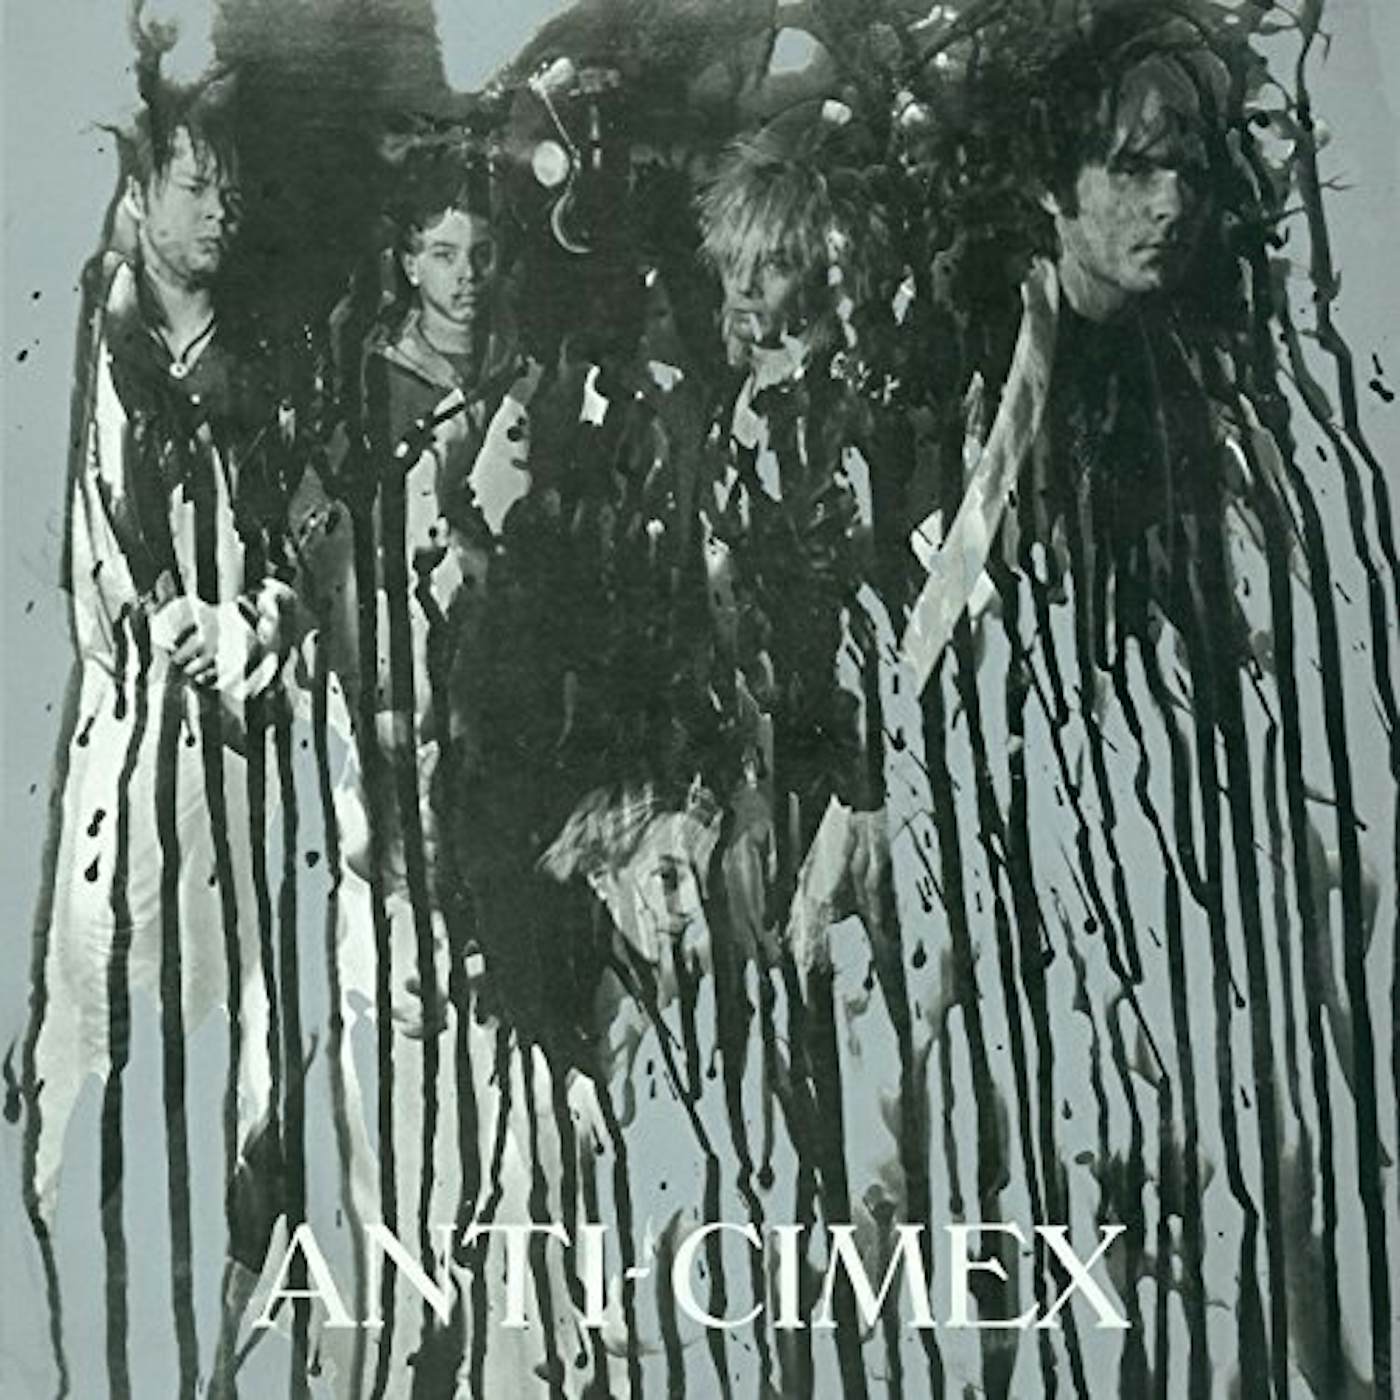 Anti Cimex 12 EP Vinyl Record